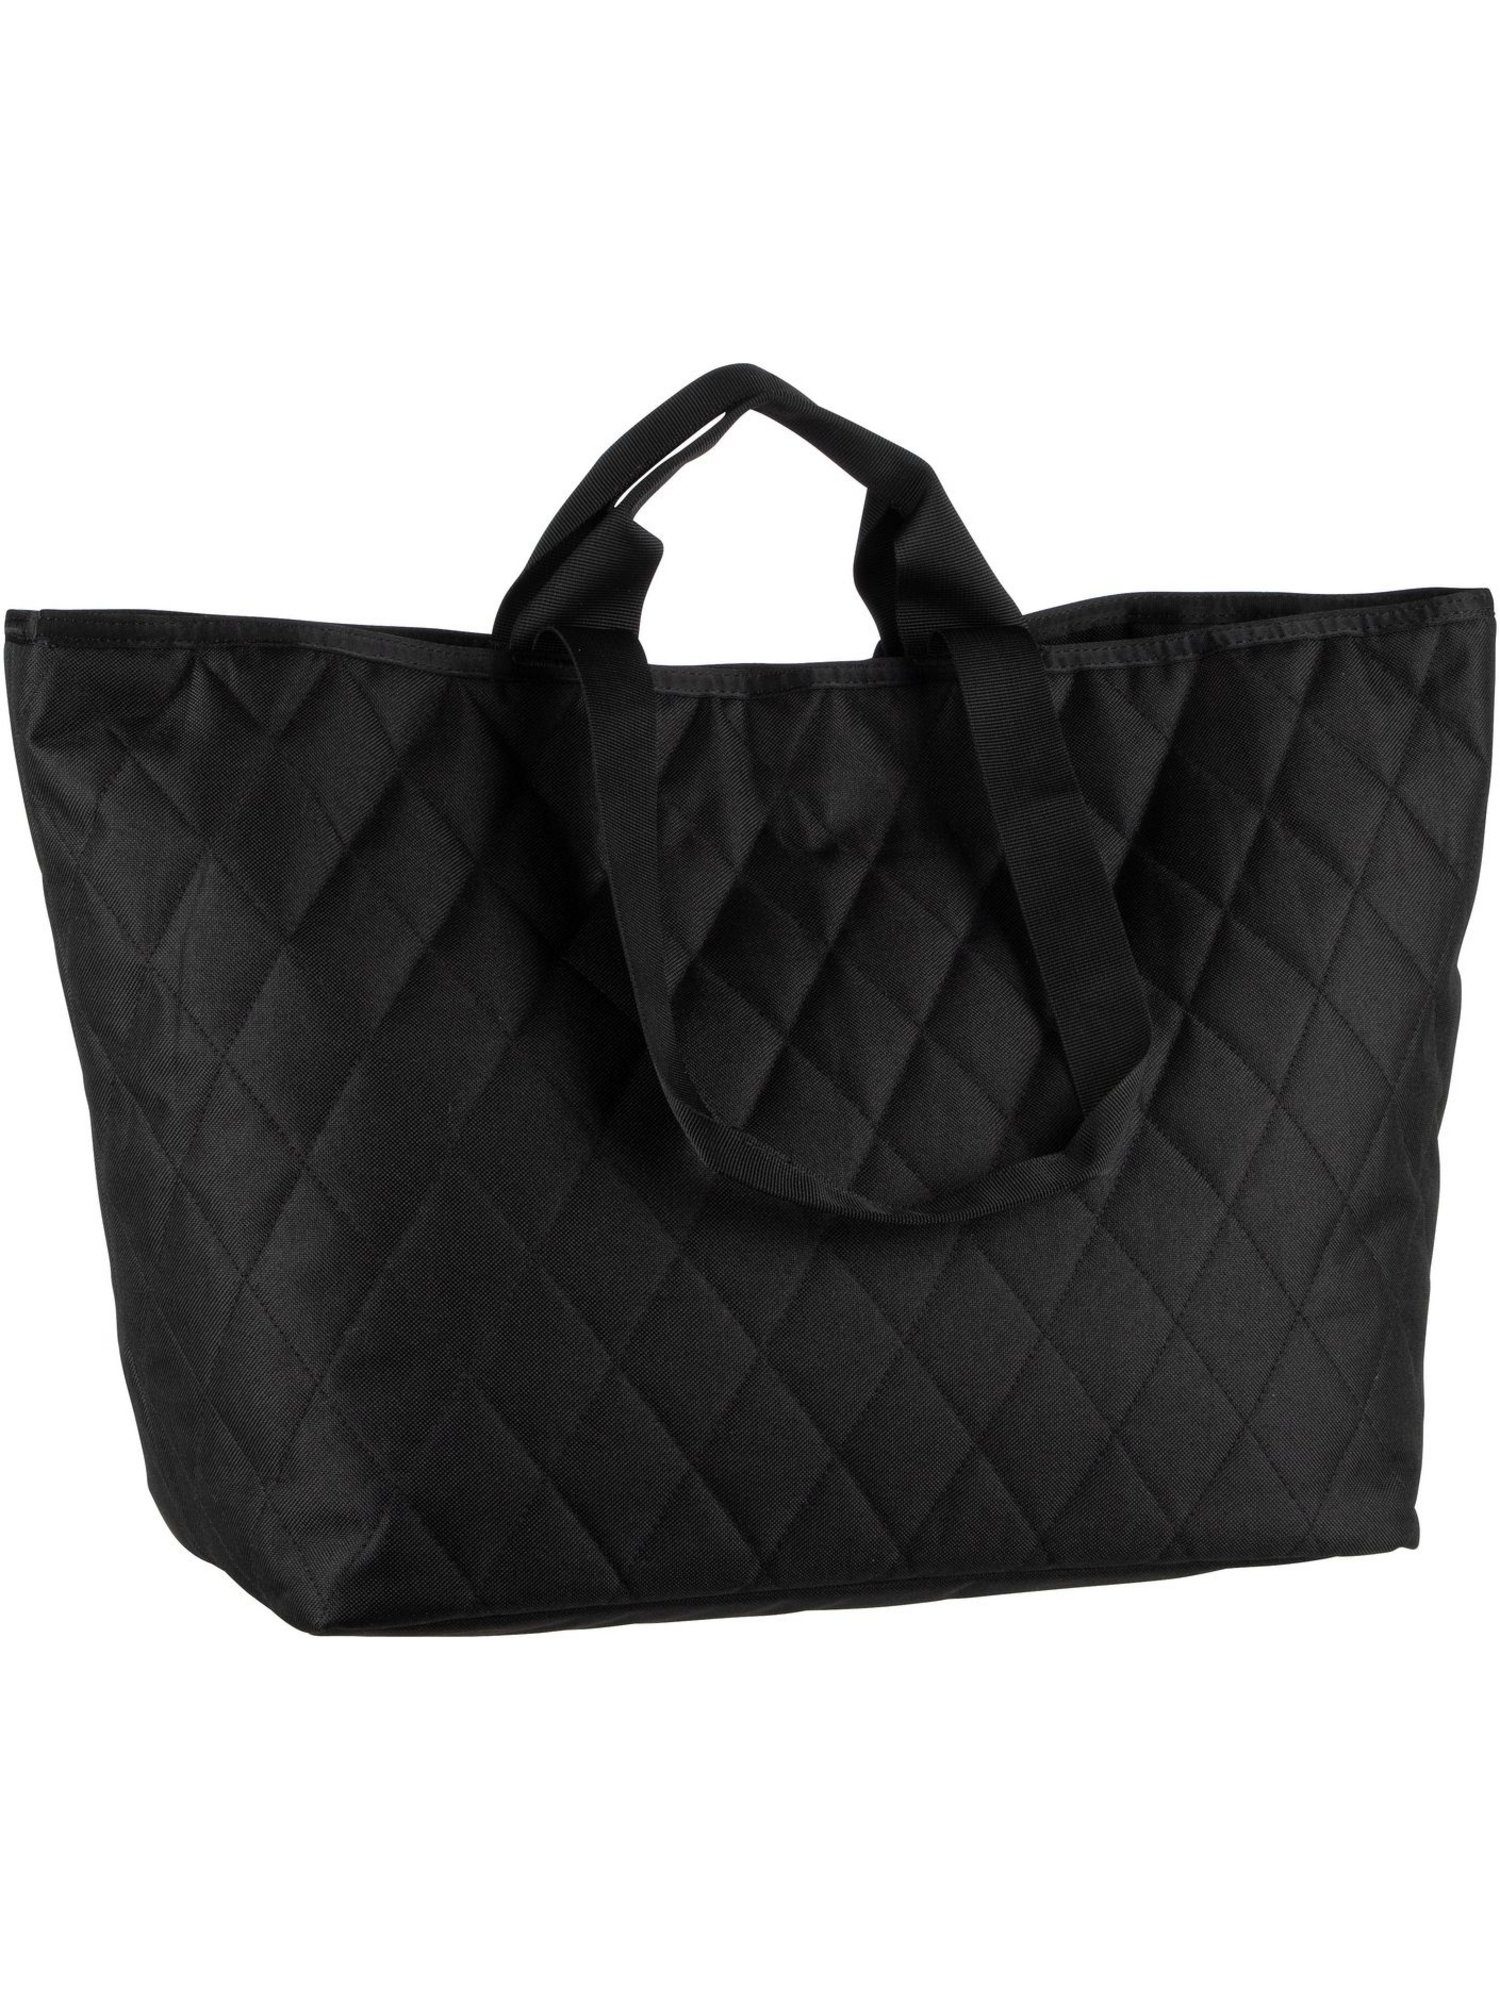 REISENTHEL® Shopper classic shopper XL Rhombus Black